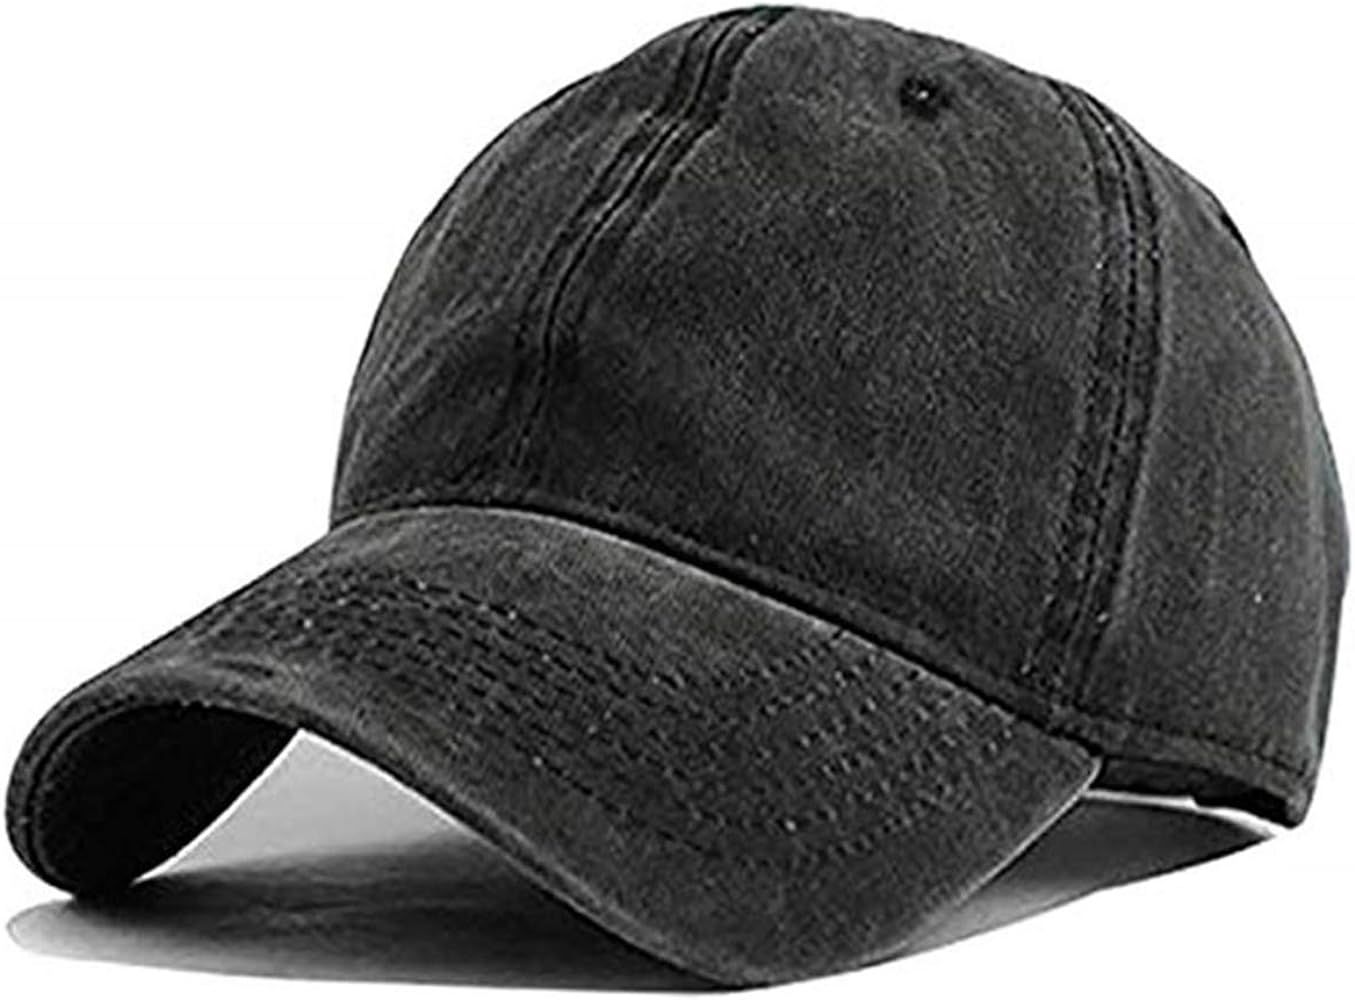 Unisex Vintage Washed Distressed Baseball-Cap Twill Adjustable Dad-Hat… | Amazon (US)